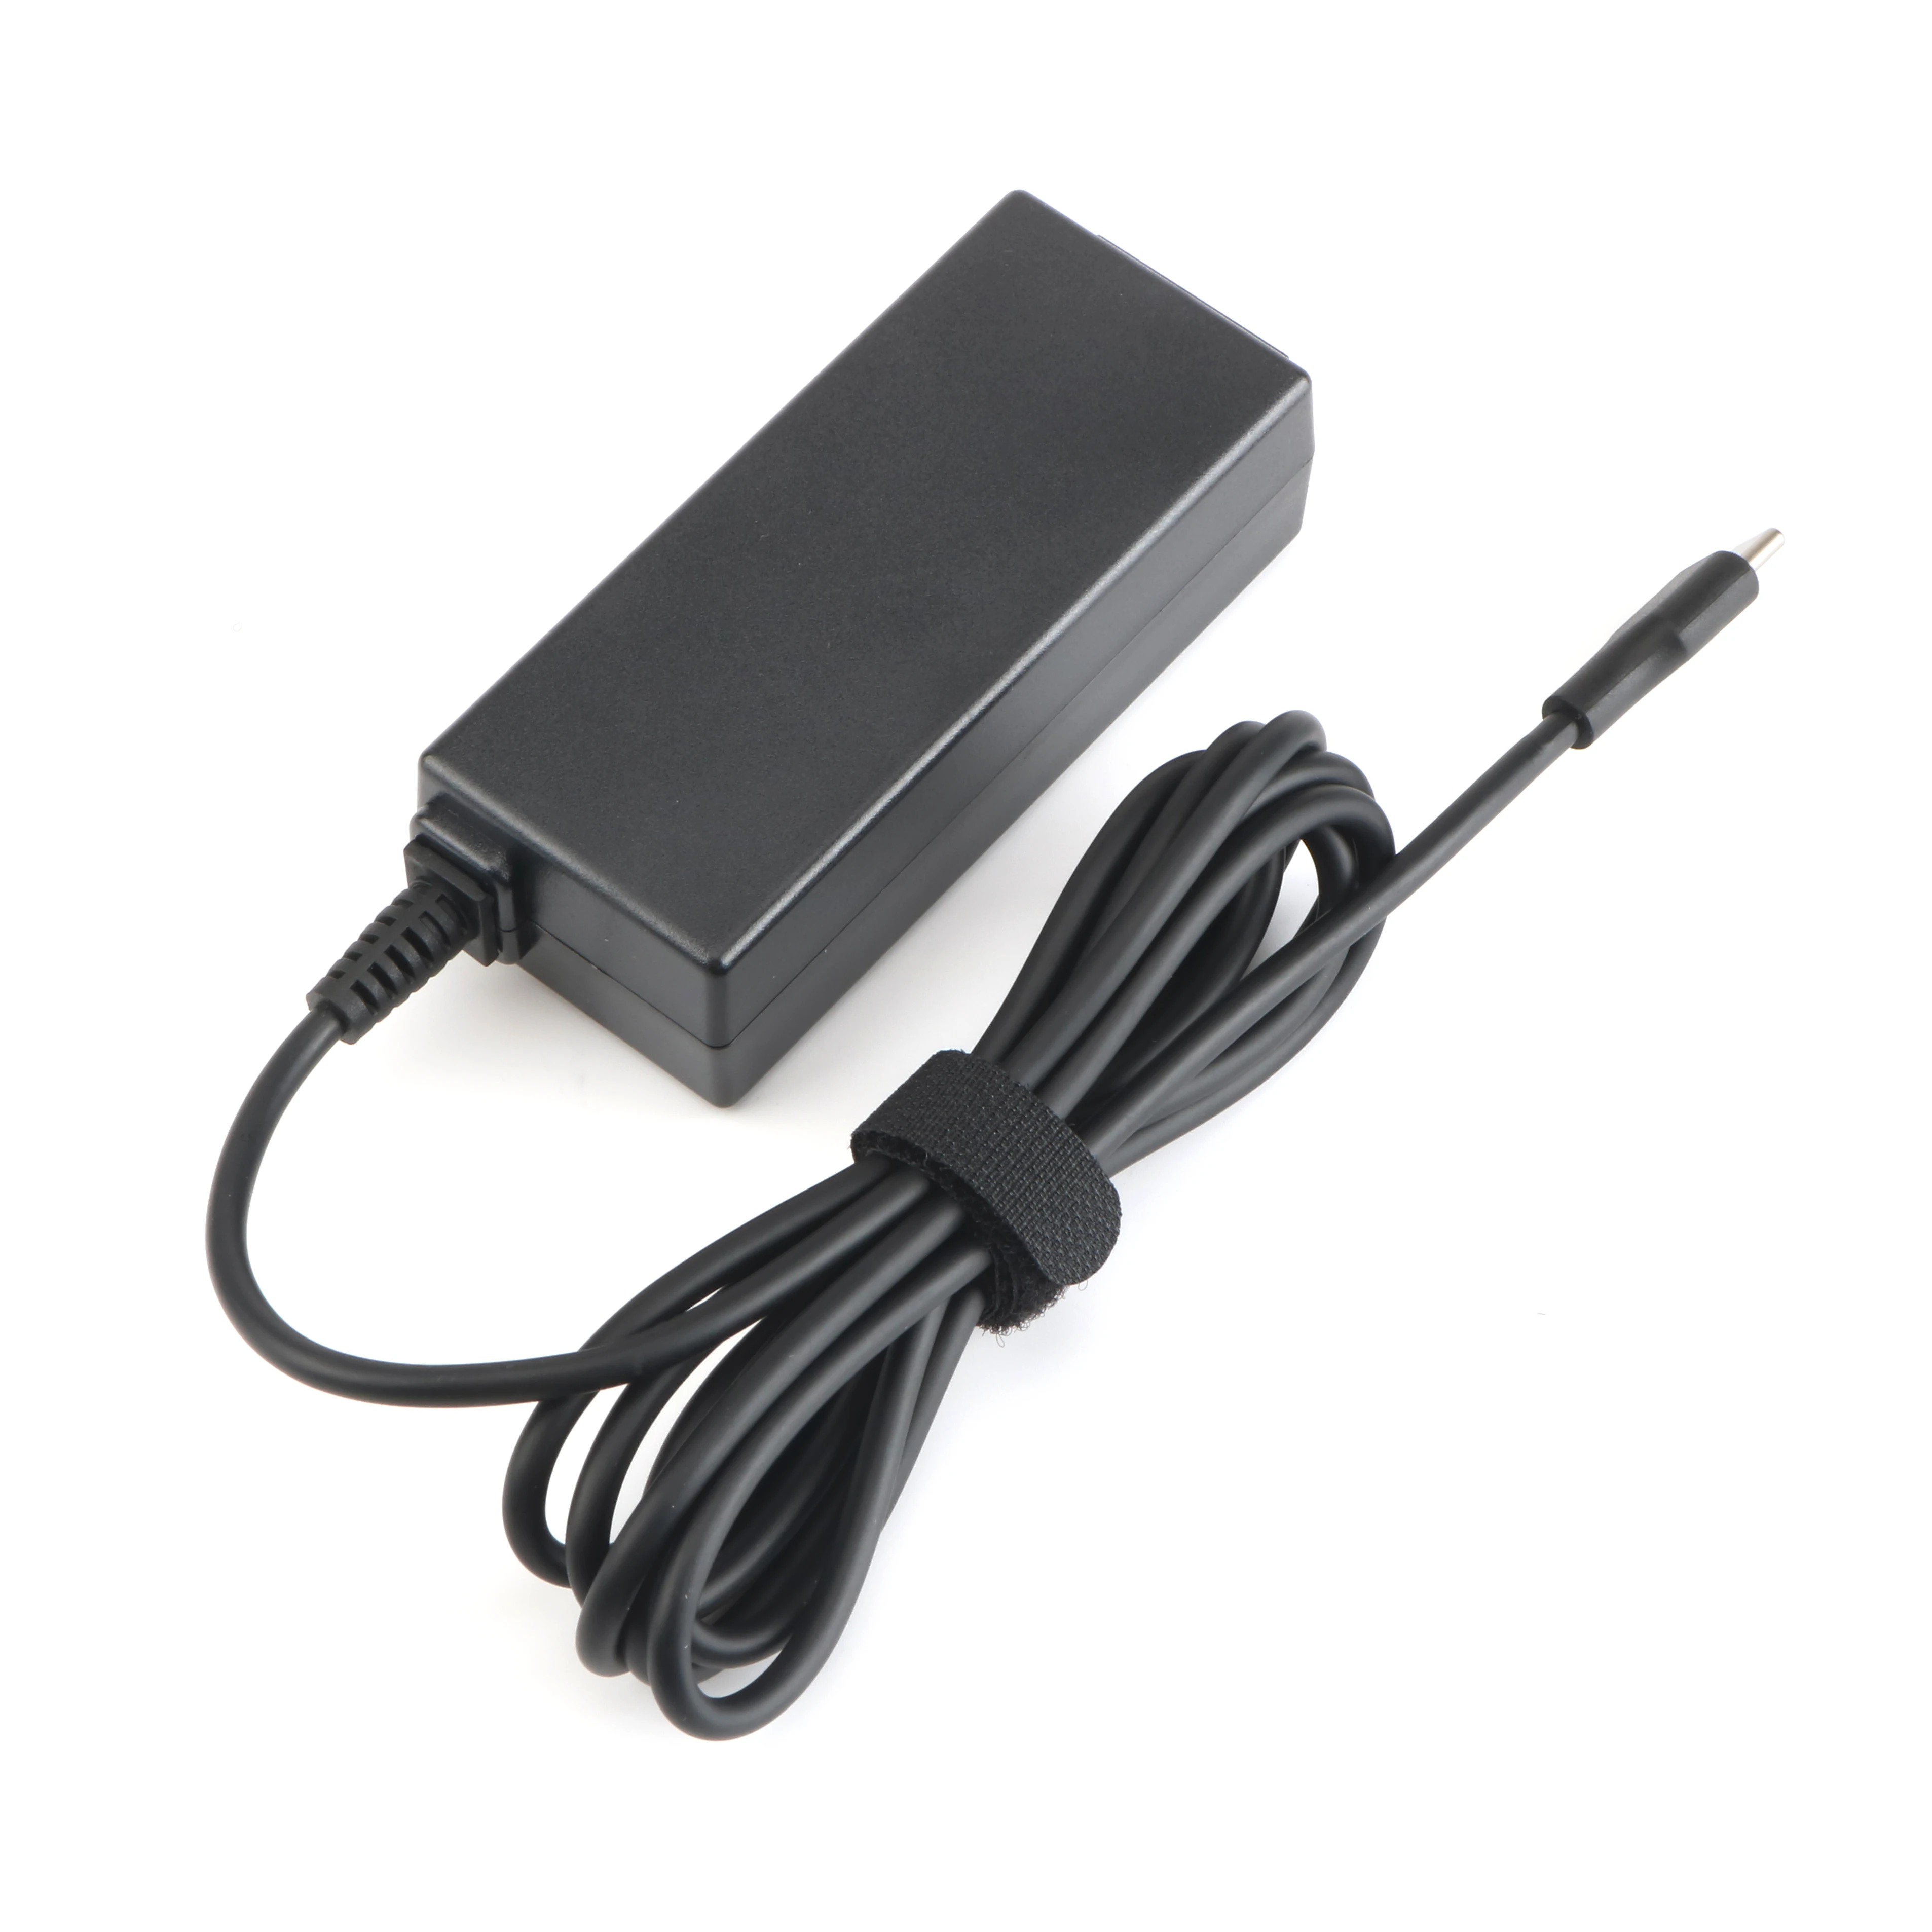 Зарядное устройство от производителя 45 Вт Тип C USB C зарядное устройство для ноутбука адаптер питания AC DC адаптер для Chromebook ноутбука